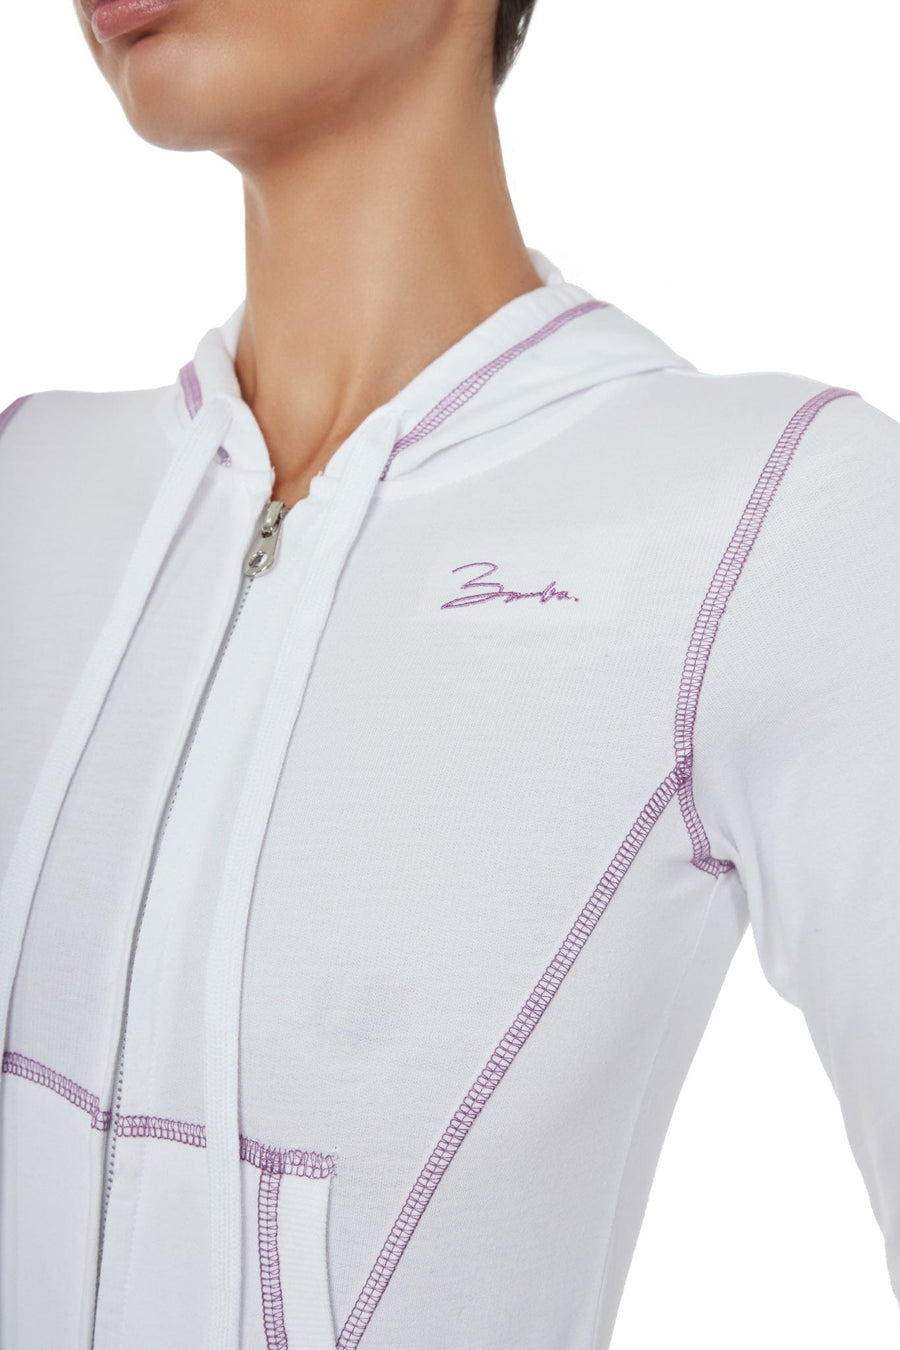 ESPRITE jacket- bianco/ violet  -  CLOTHING  -  B Ā M B A S W I M